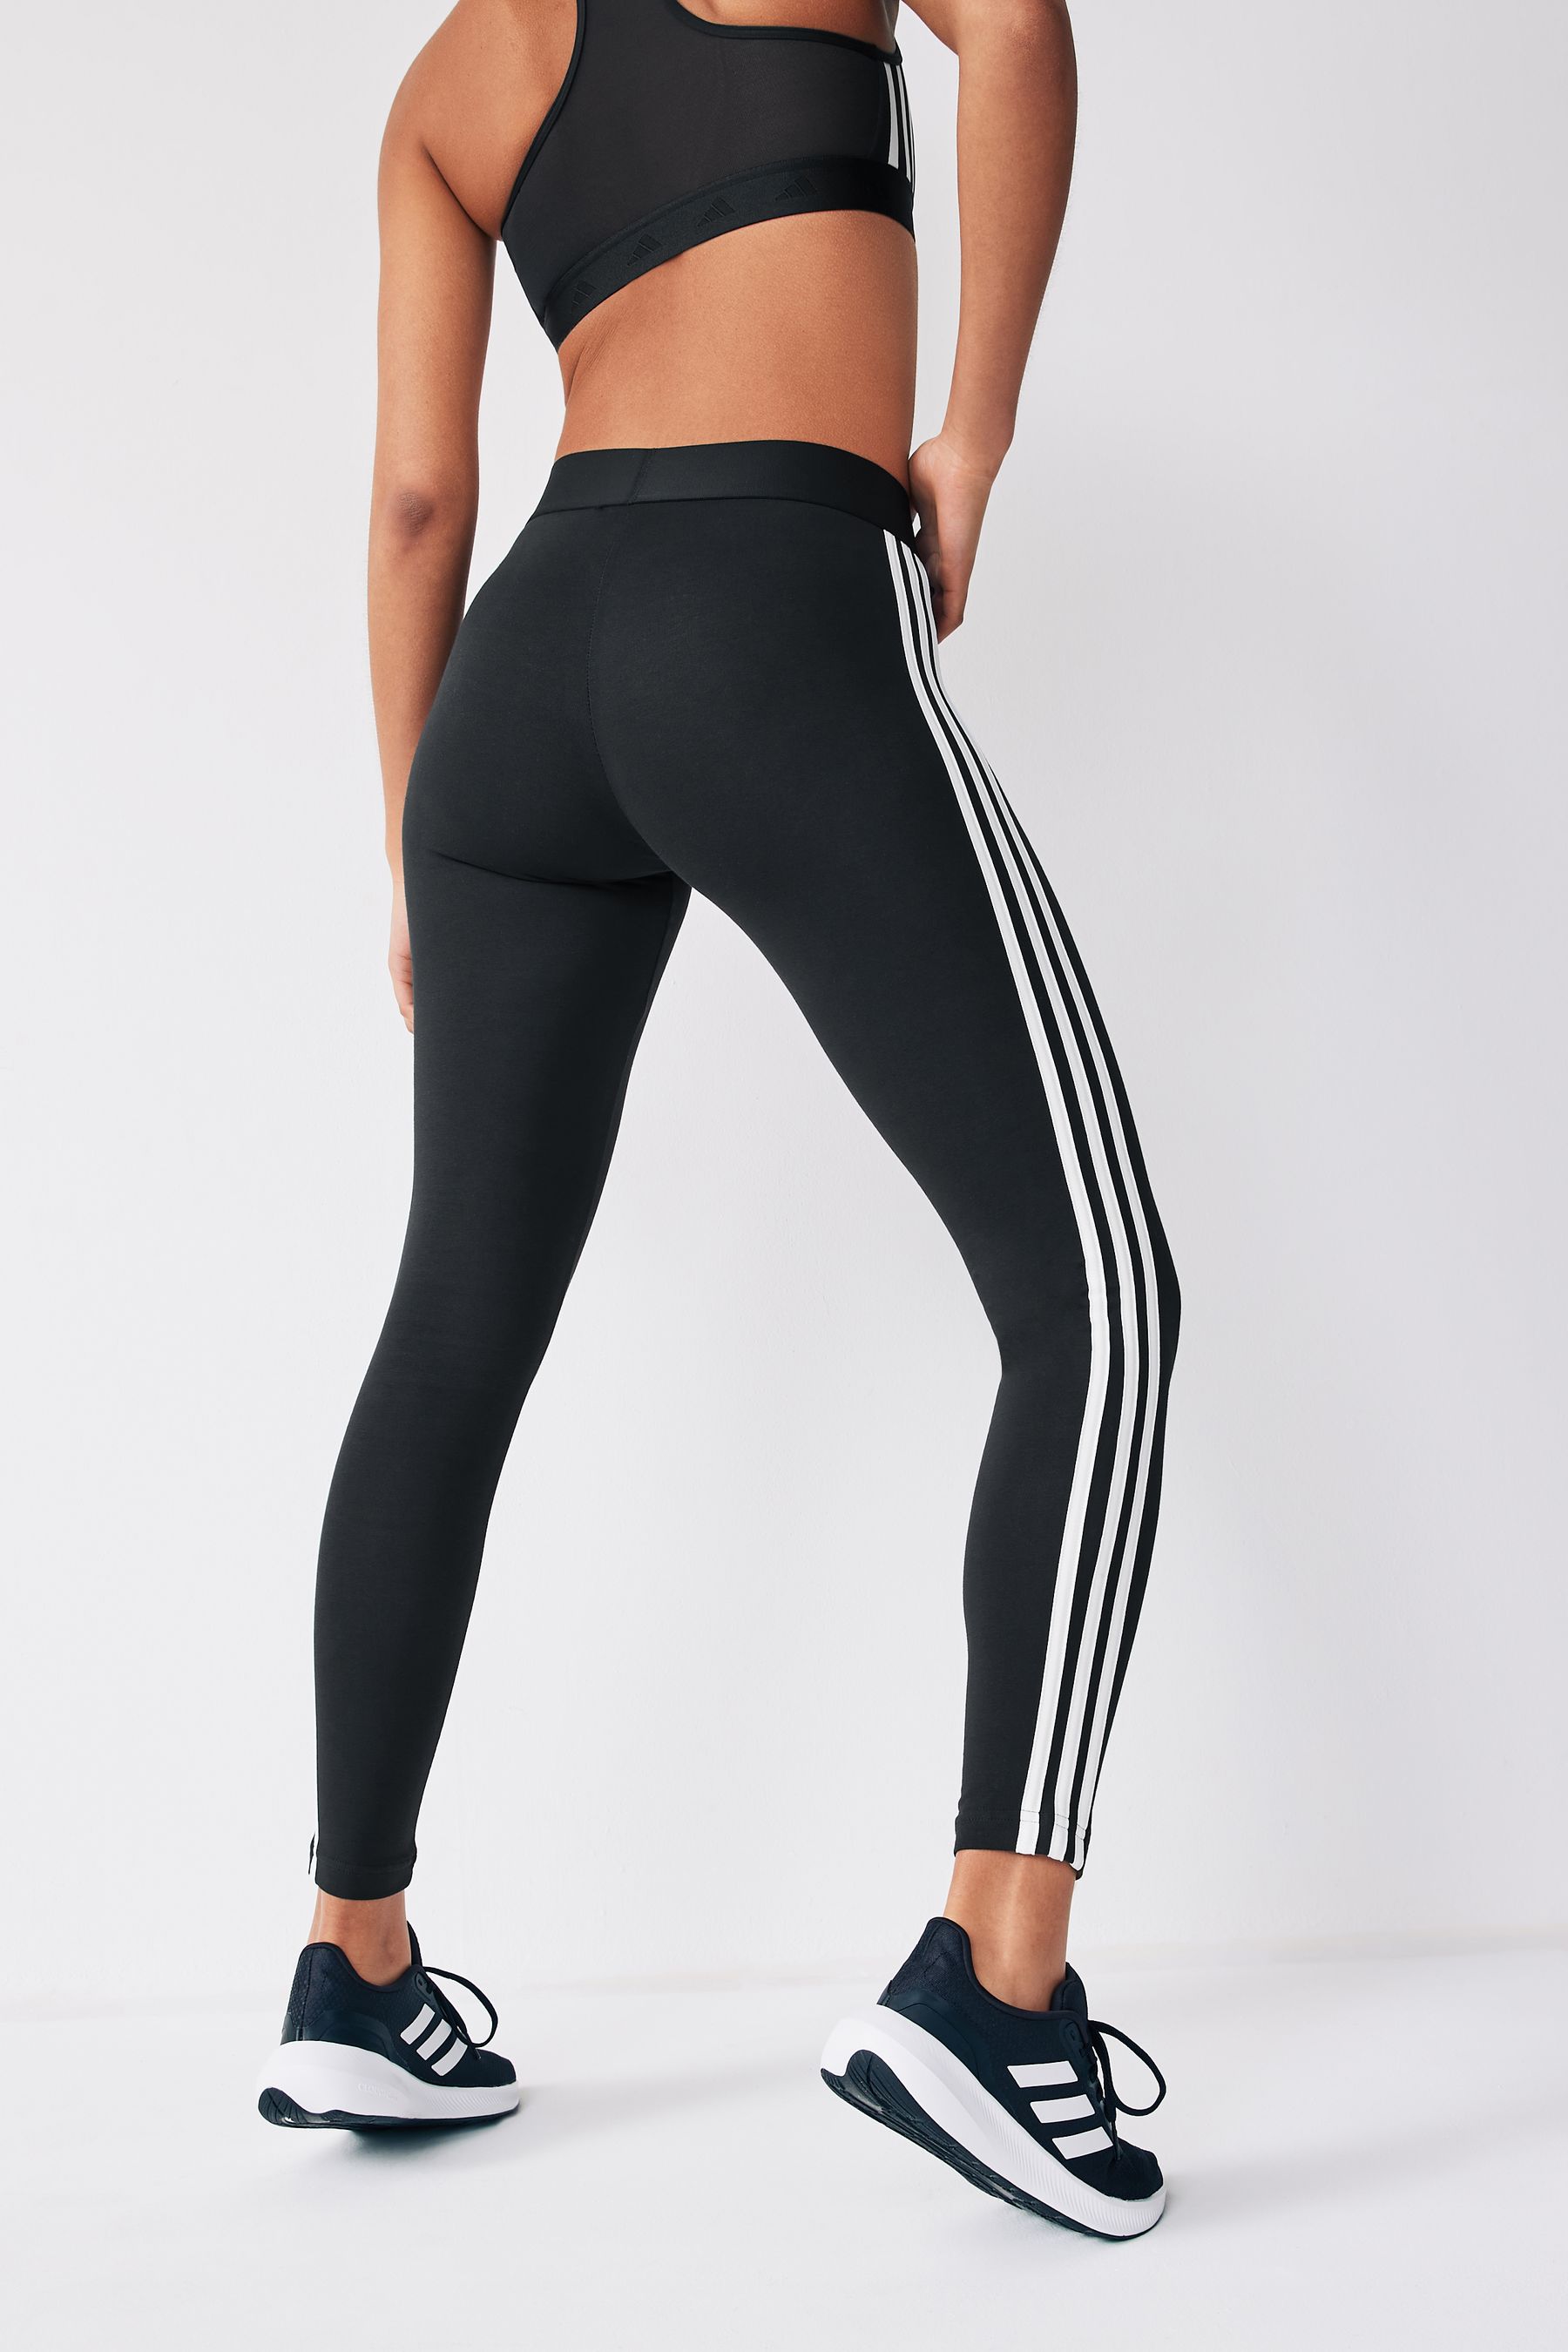 Buy adidas Black Sportswear 3 Stripes Leggings from the Next UK online shop